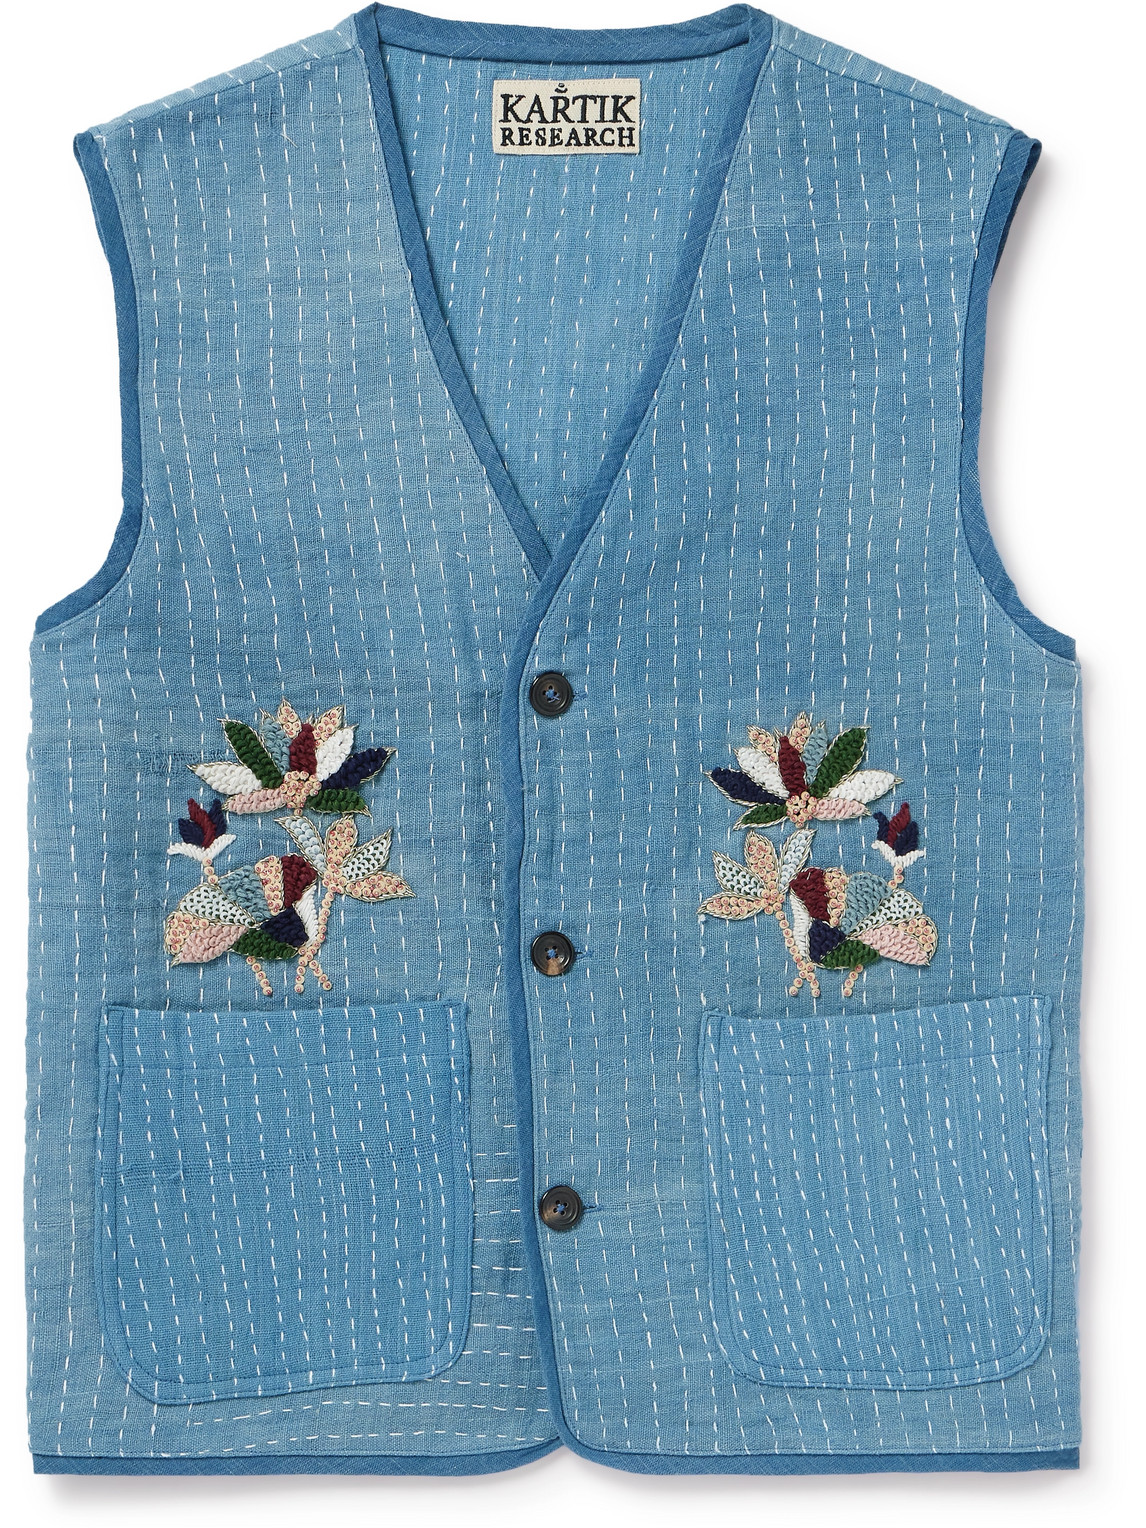 Kartik Research - Embroidered Cotton Vest - Men - Blue - L von Kartik Research